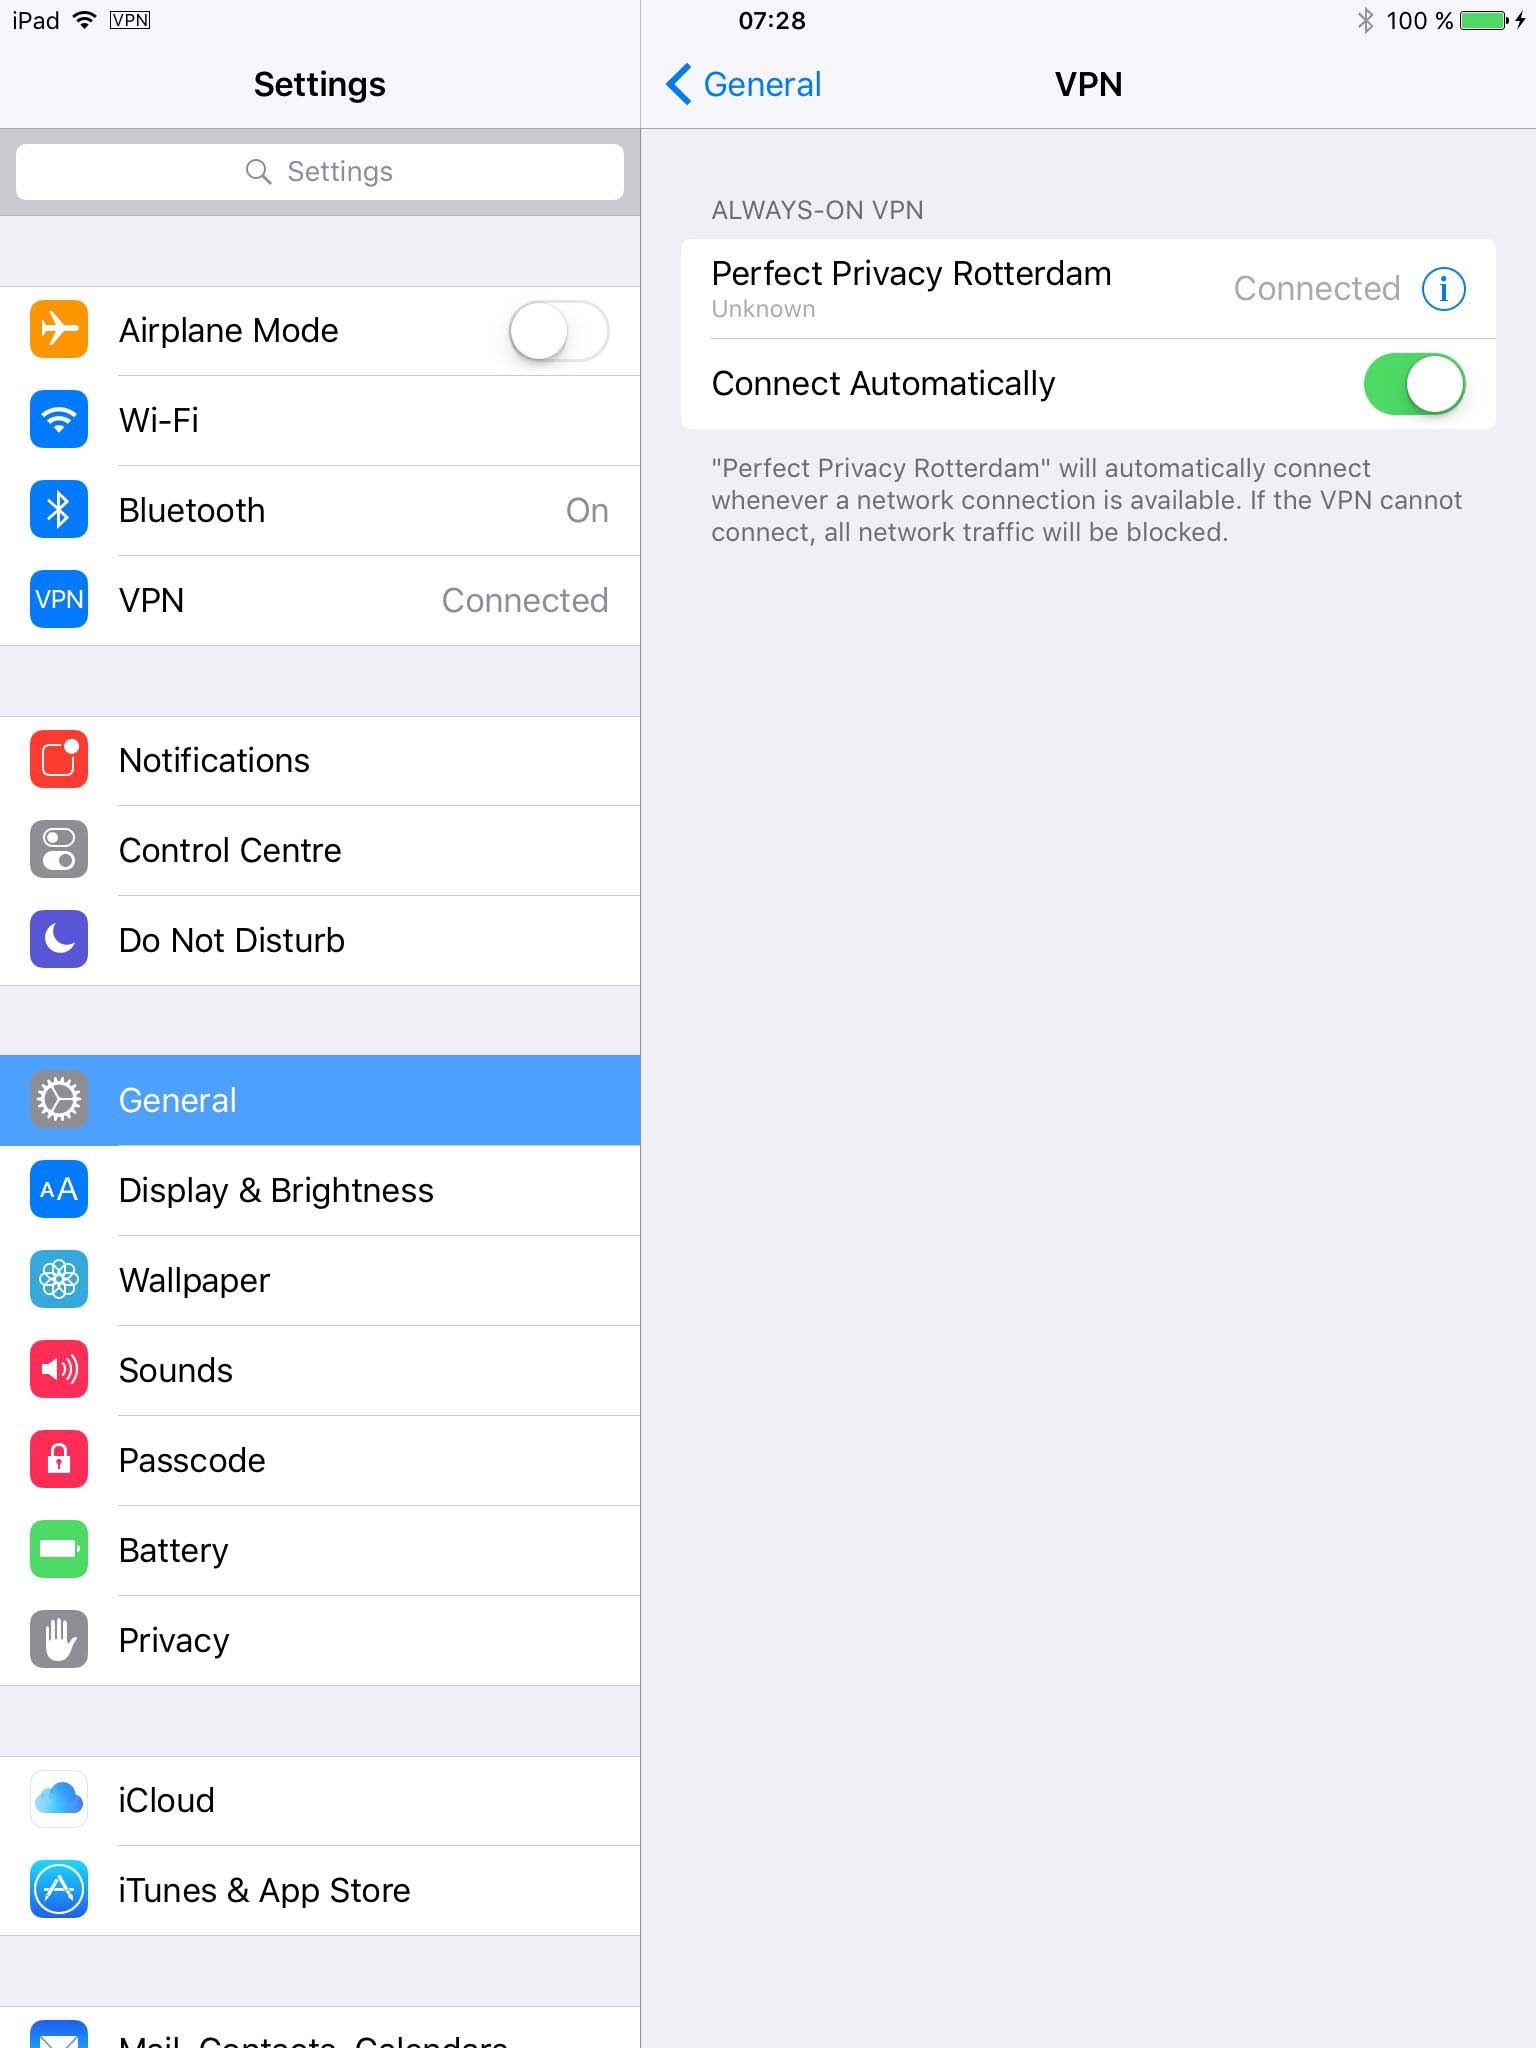 iPad: Always-On VPN ist aktiviert | Always-On VPN mit iPhone und iPad